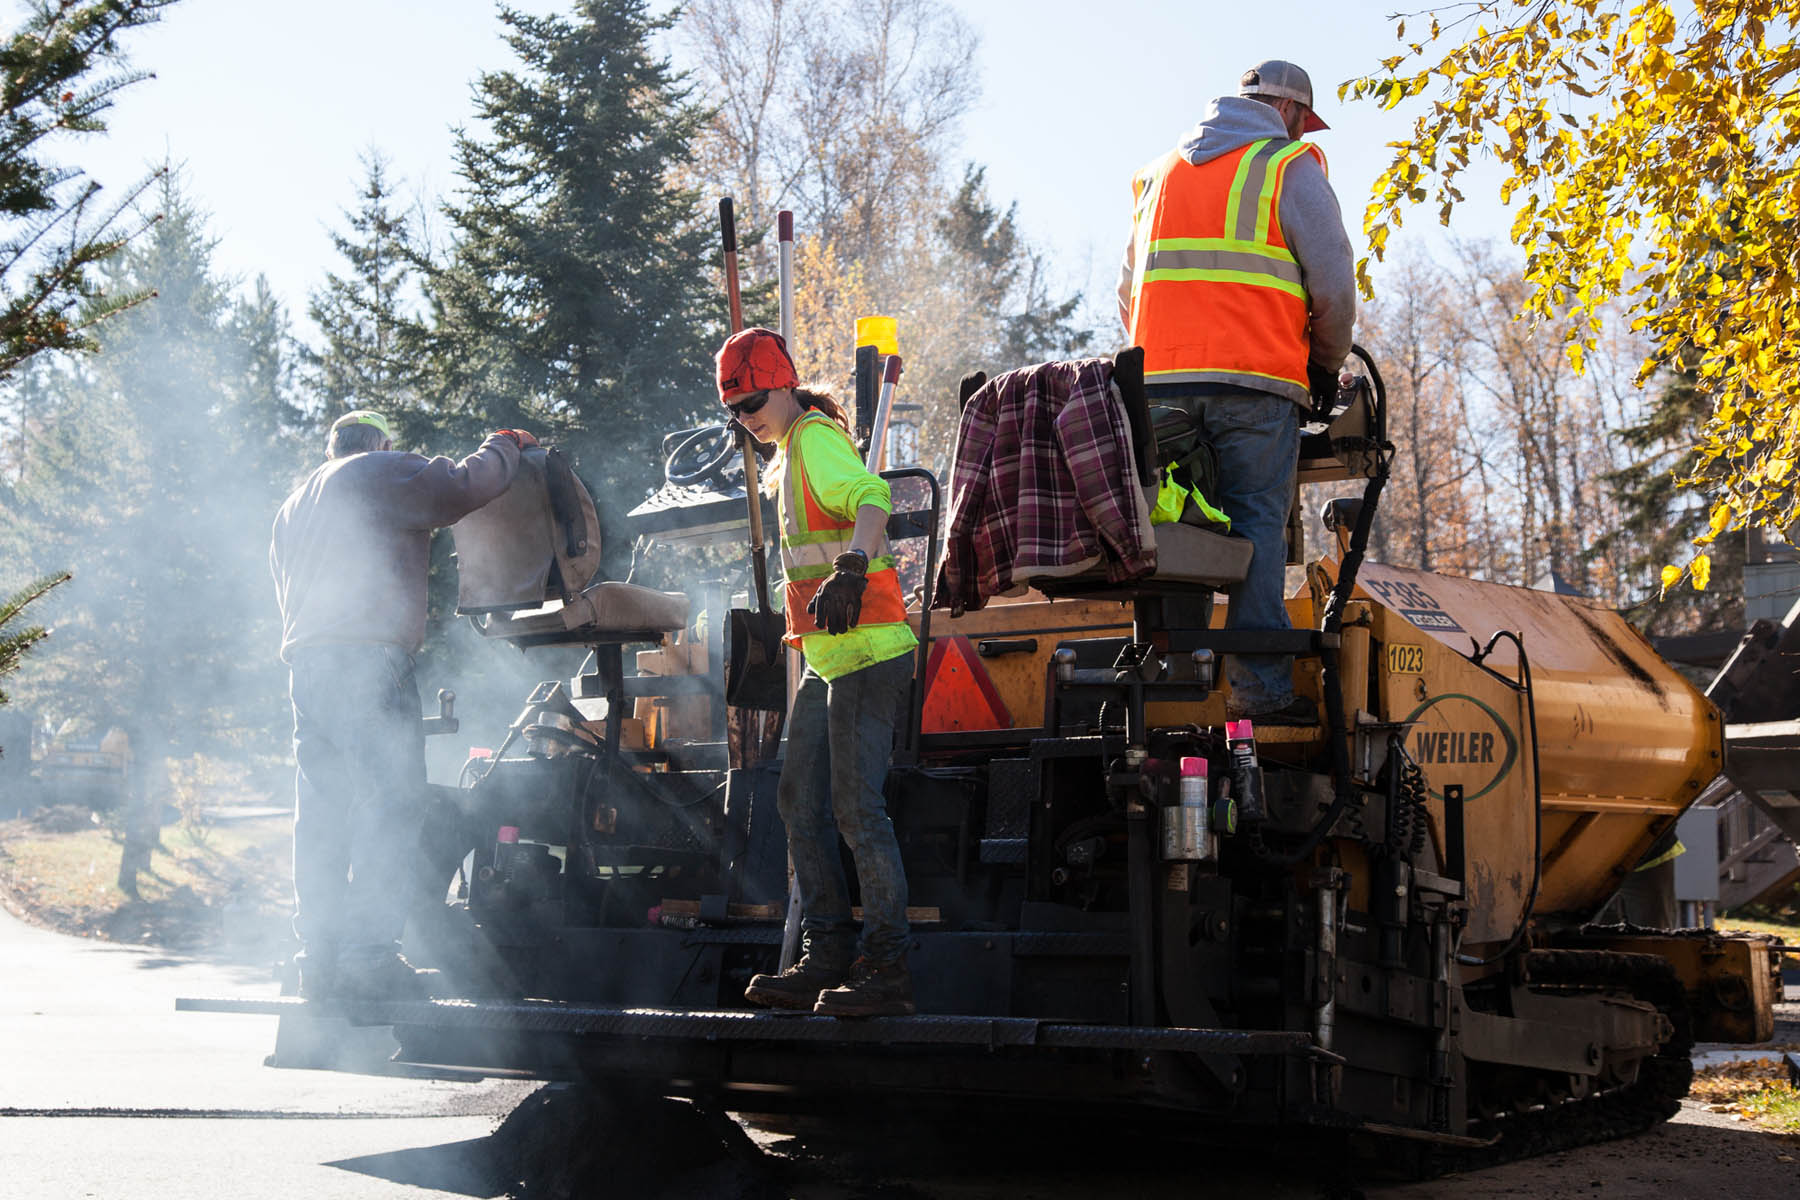 Employees riding heavy machinery handling asphalt